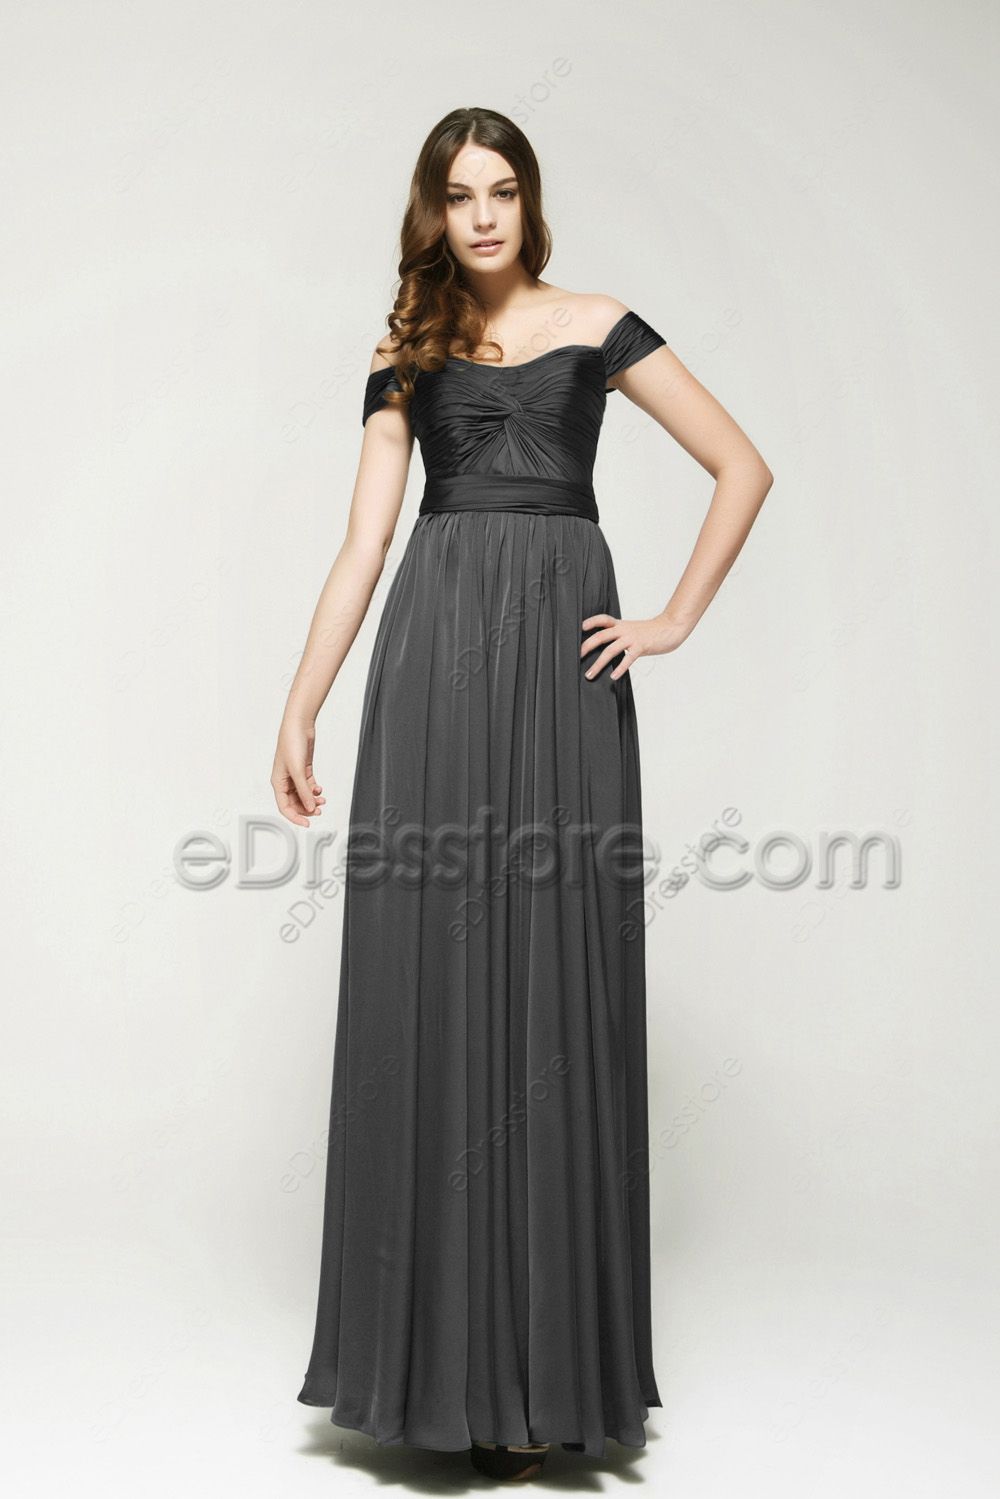 Off the Shoulder Black Satin Bridesmaid Dresses | eDresstore